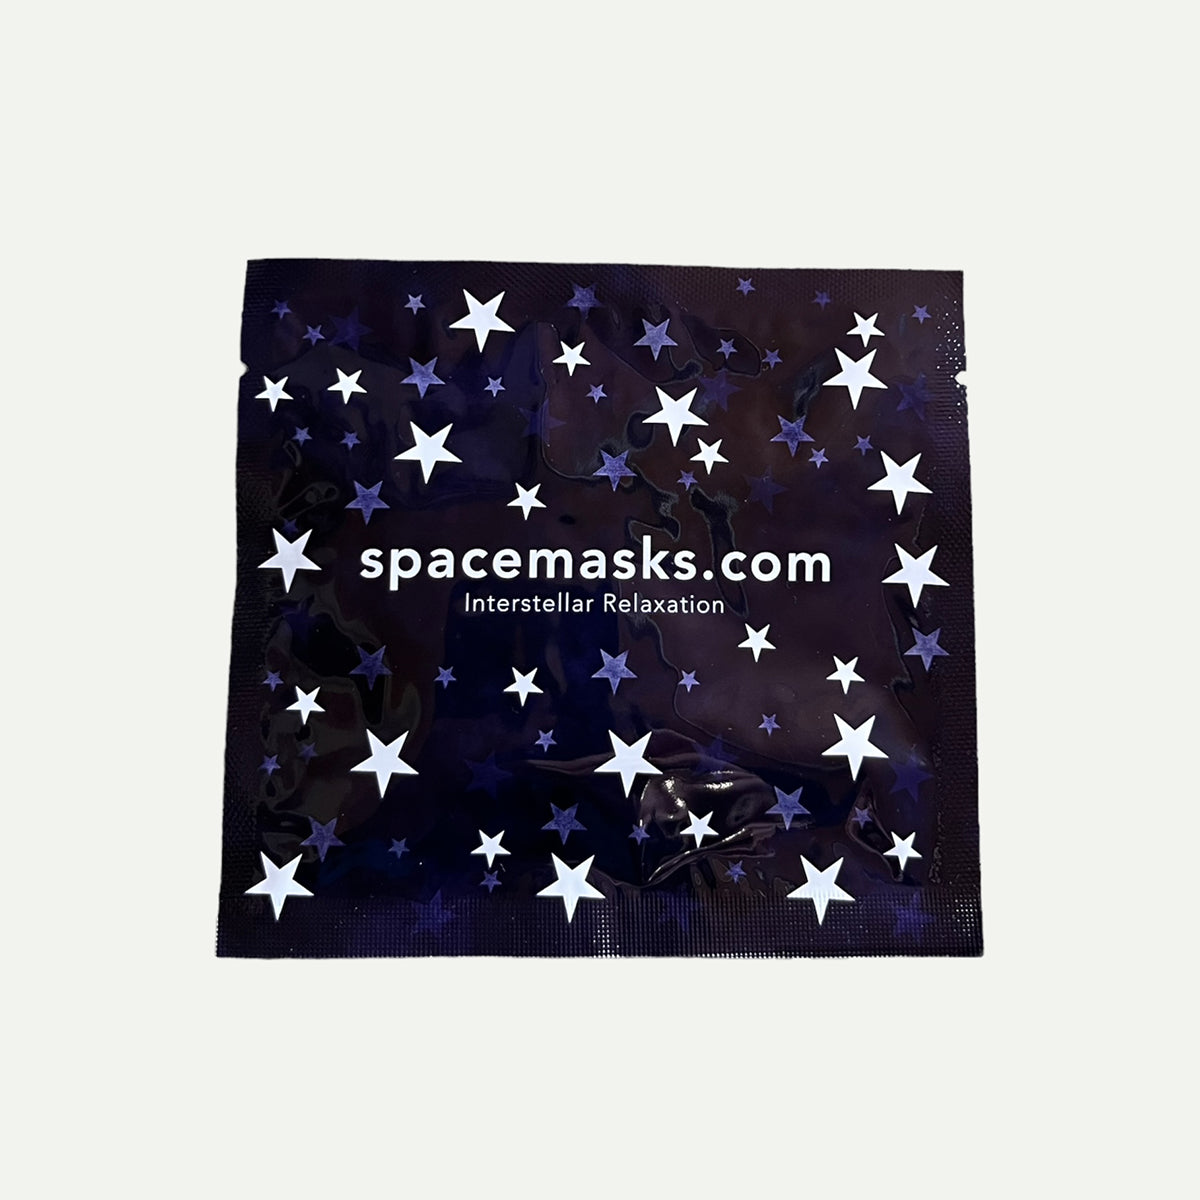 Spacemasks Jasmine scented Spacemask.